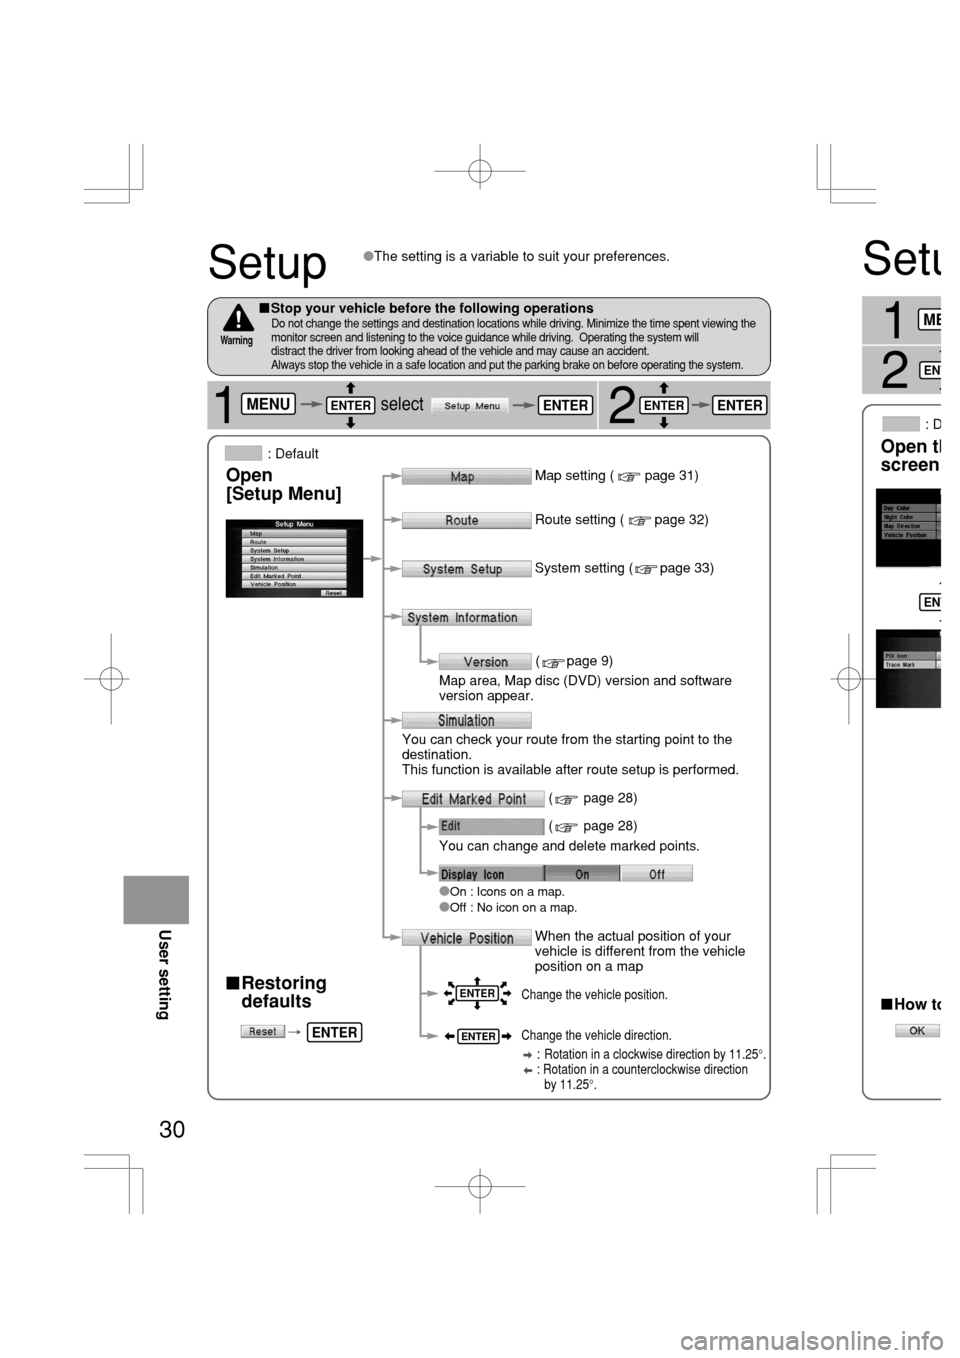 MAZDA MODEL RX 8 2005  Owners Manual (in English) Setu
1
Open th
screen
How to
asE
J
ME
ENT
ENT
30
Setup
2
Restoring
defaults
Map setting (        page 31)

On : Icons on a map.Off : No icon on a map.
The setting is a variable to suit your prefe